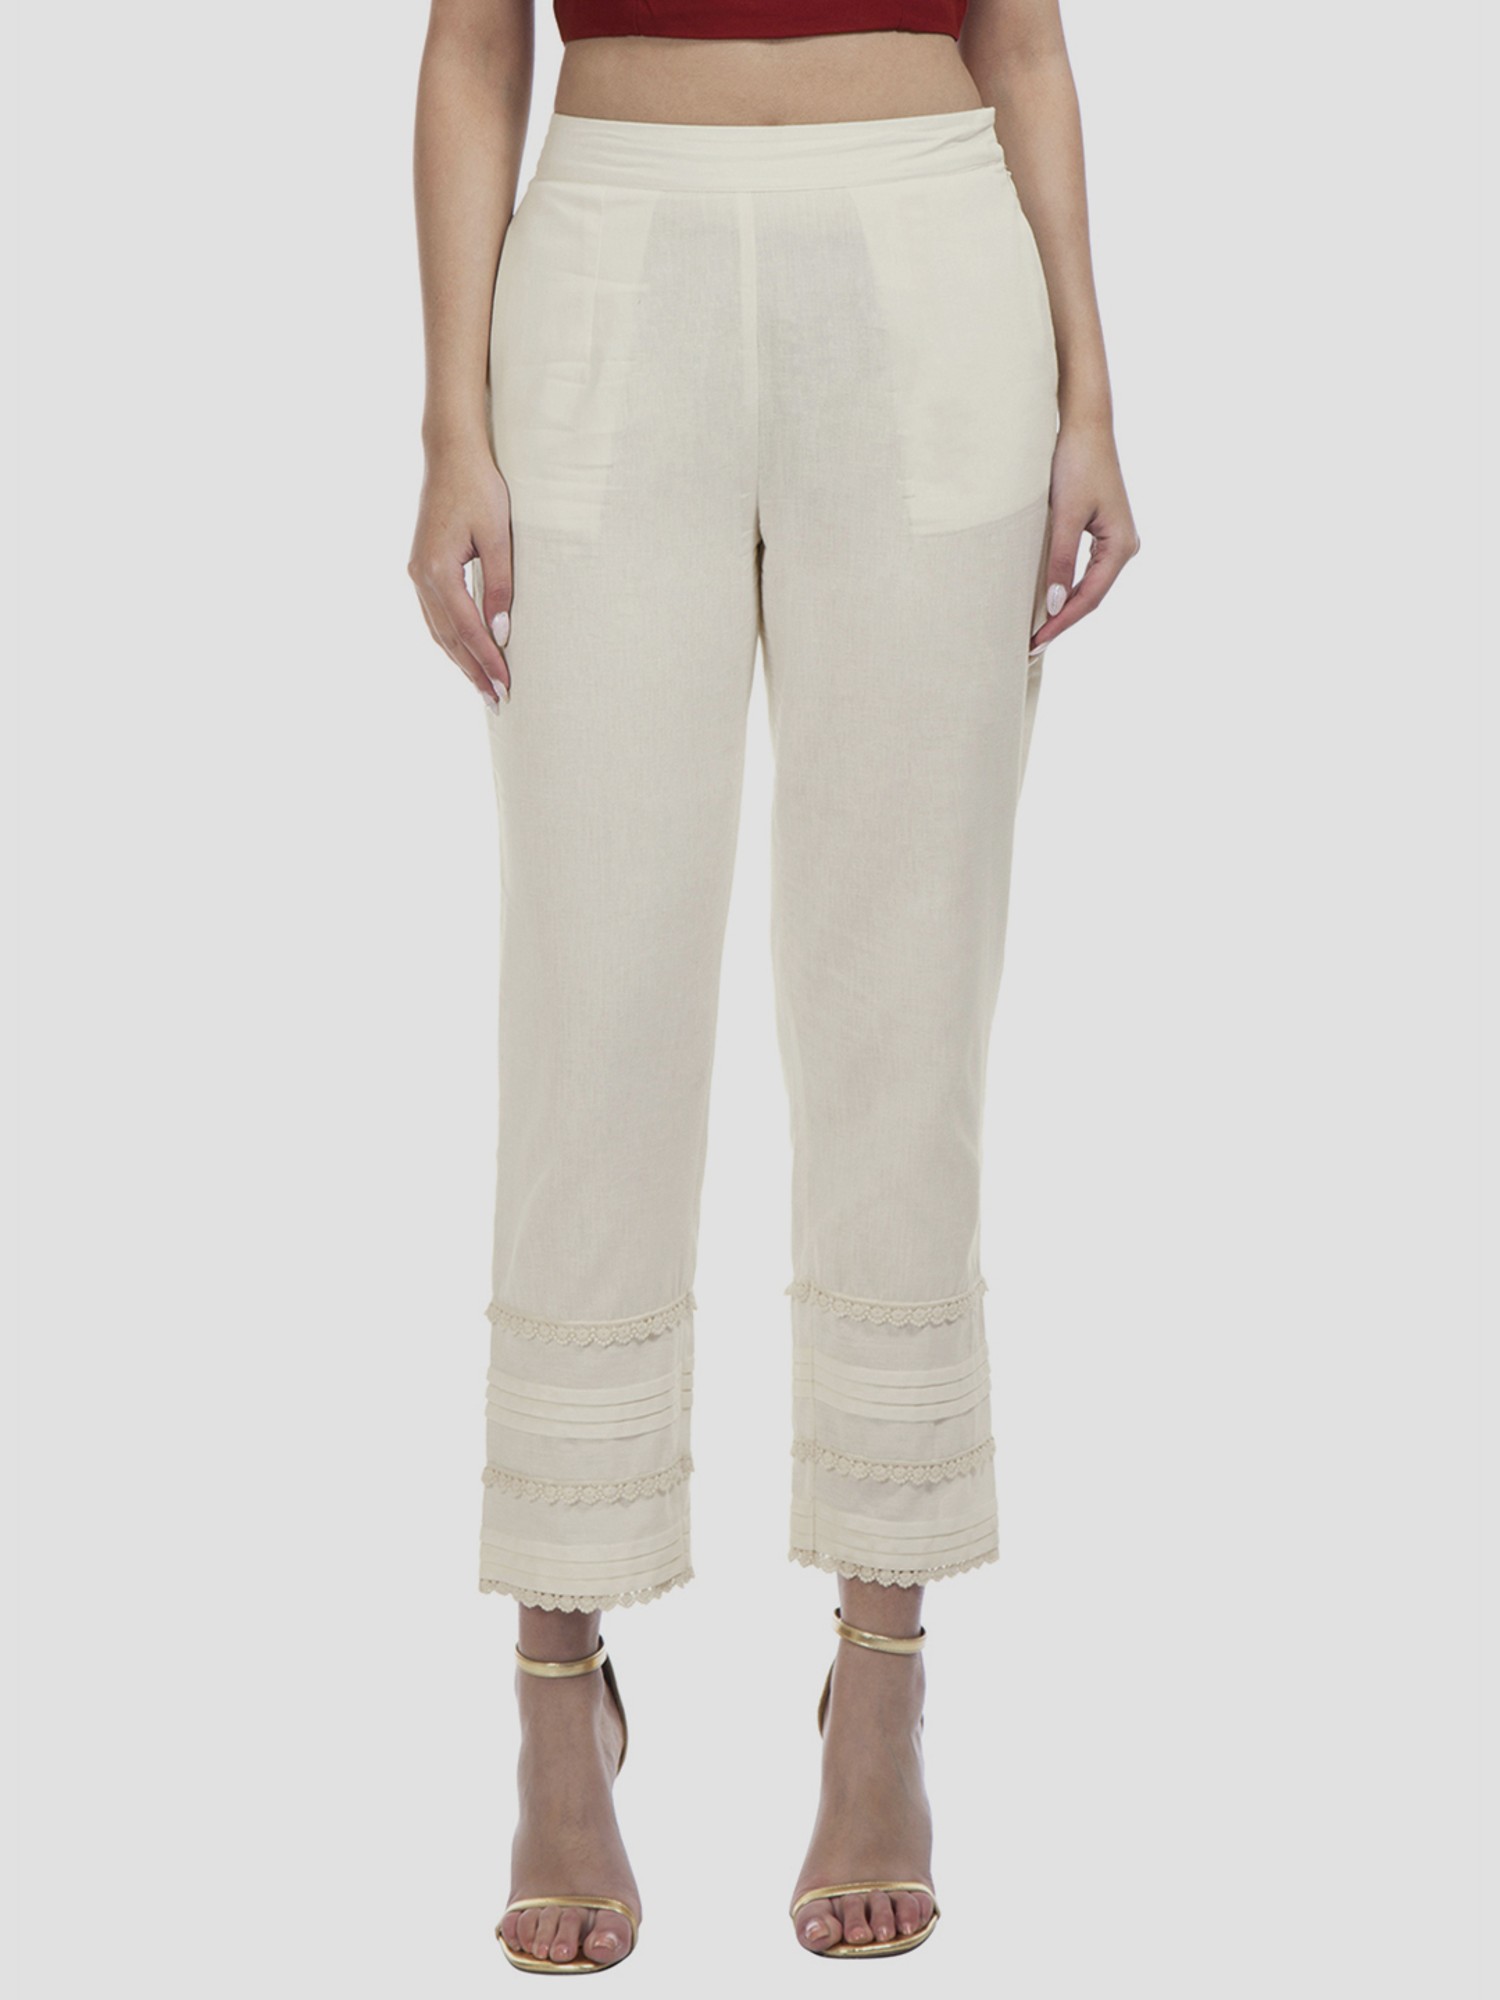 Buy INDYA Solid Silk Regular Fit Women's Casual Pants | Shoppers Stop